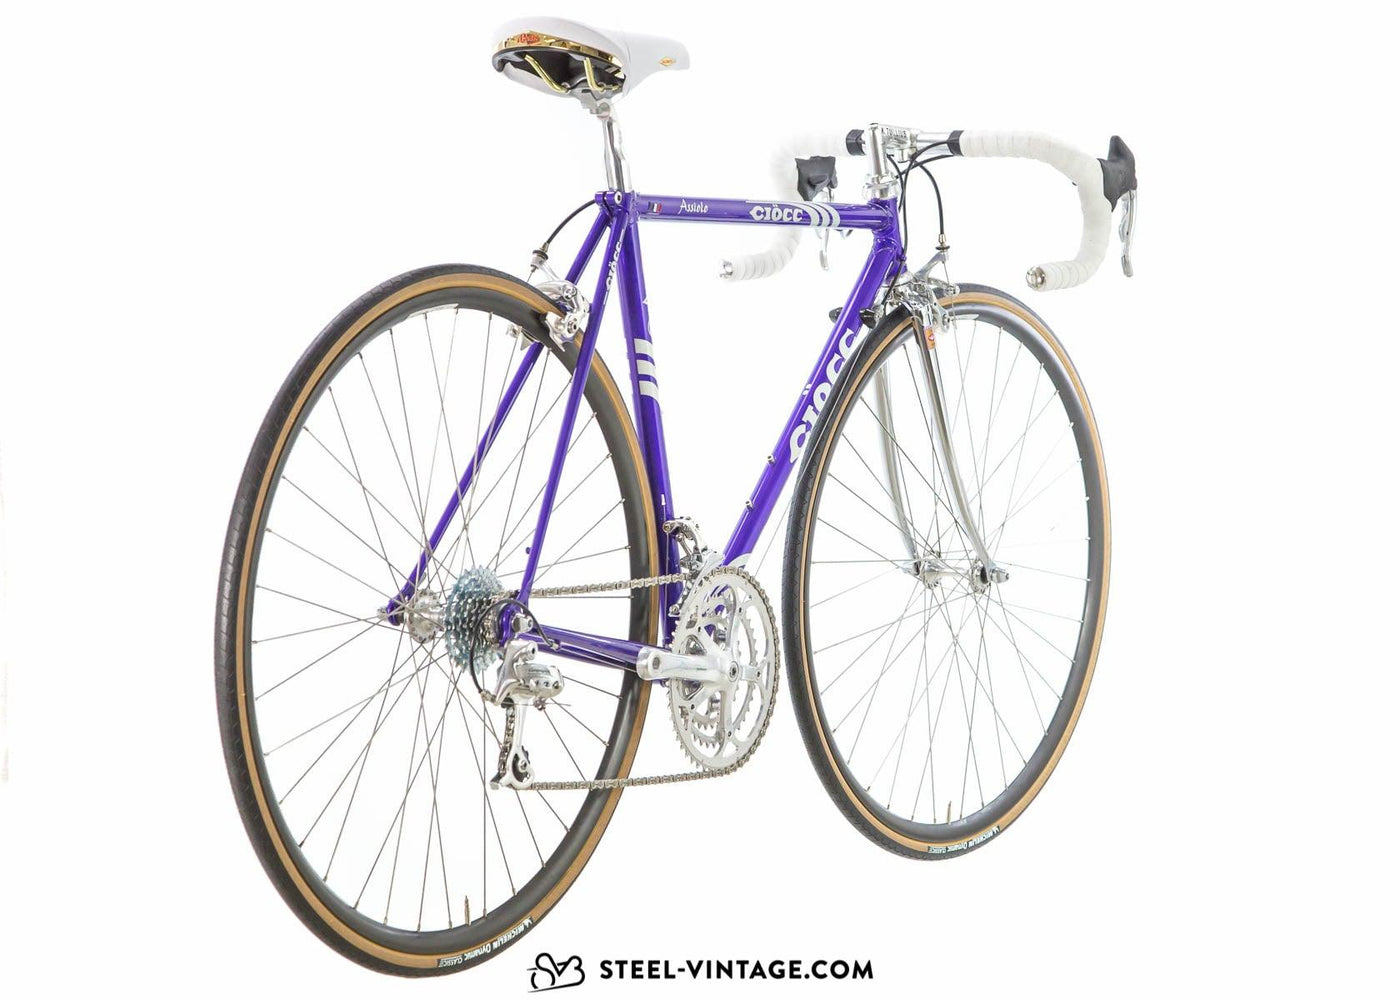 Ciöcc Assiolo Classic Road Bicycle 1990s - Steel Vintage Bikes